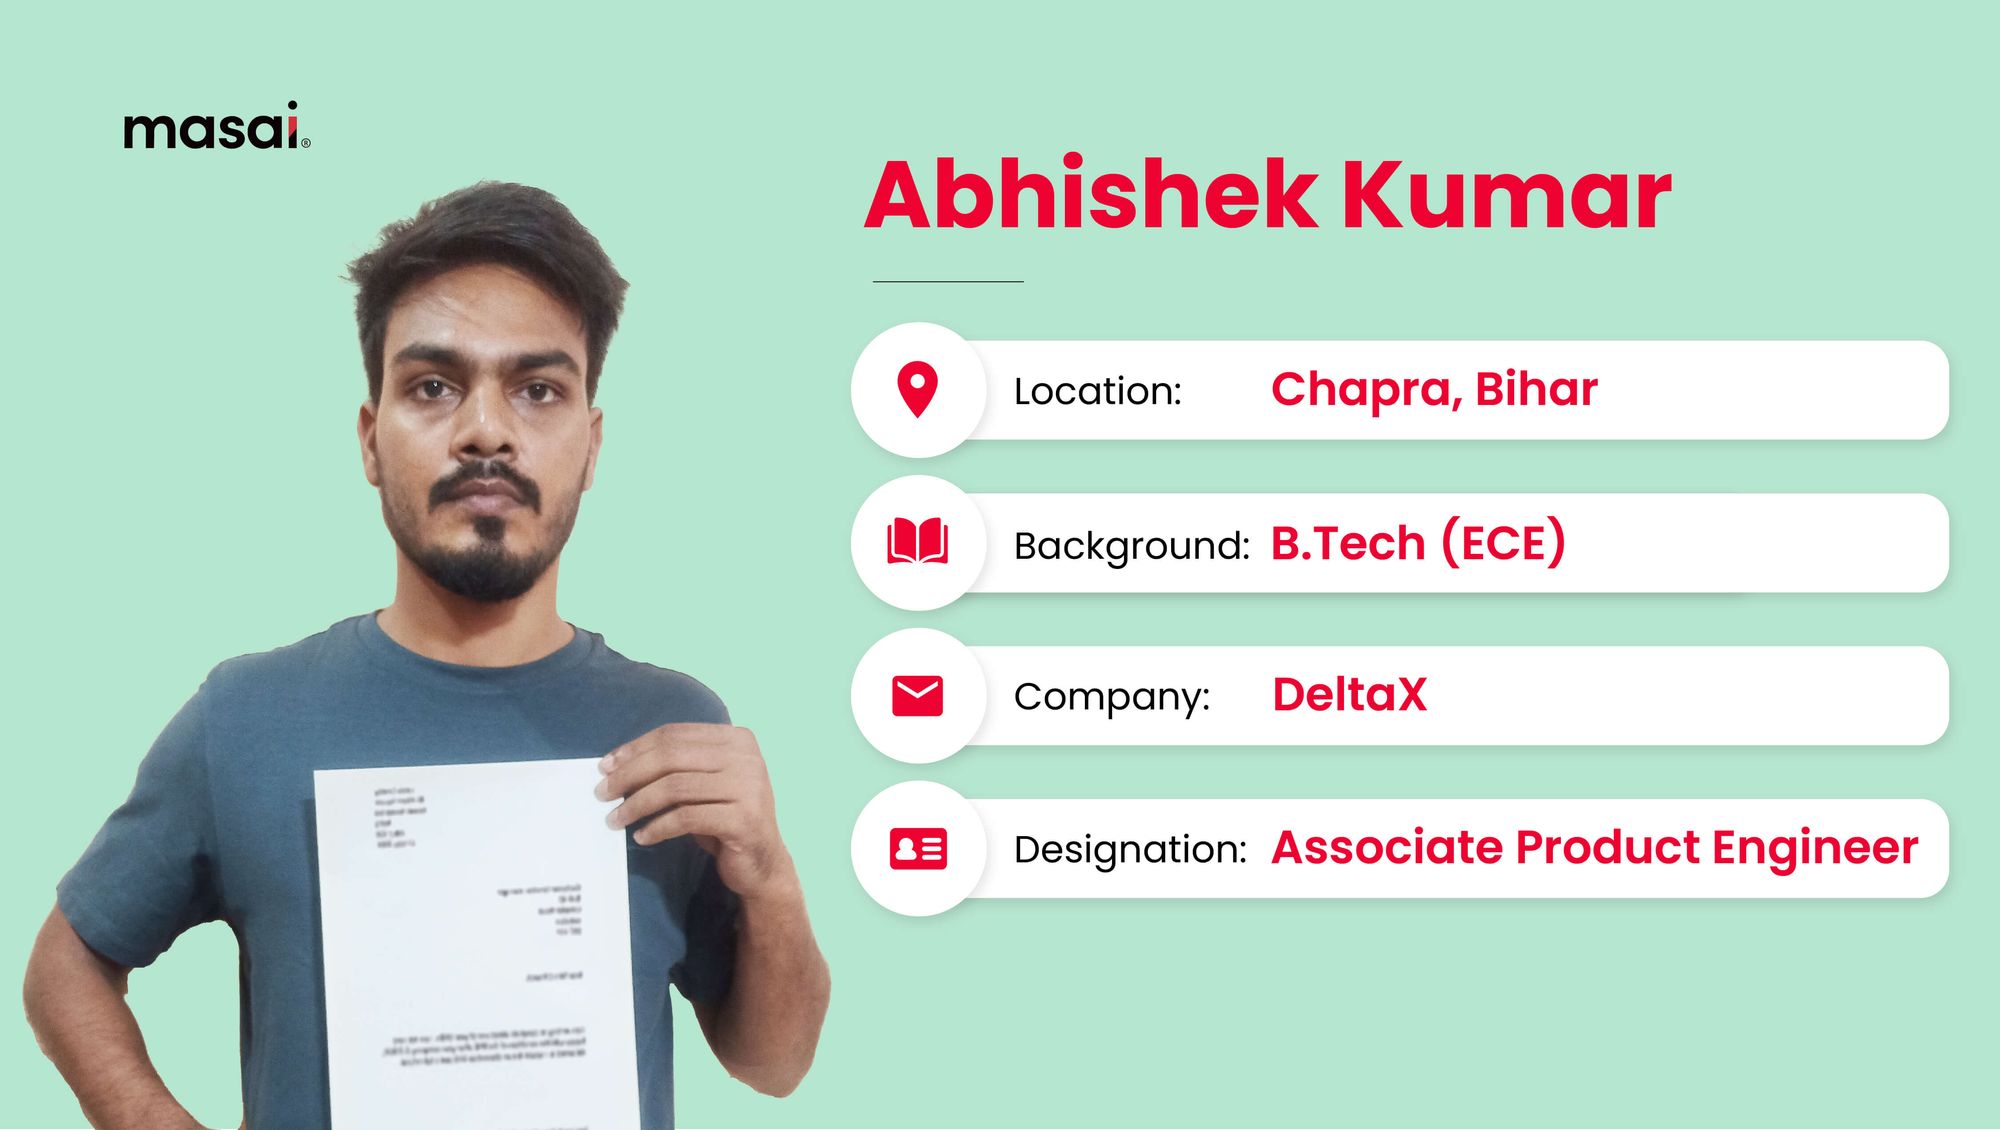 Abhishek Kumar - A Masai graduate now working at DeltaX